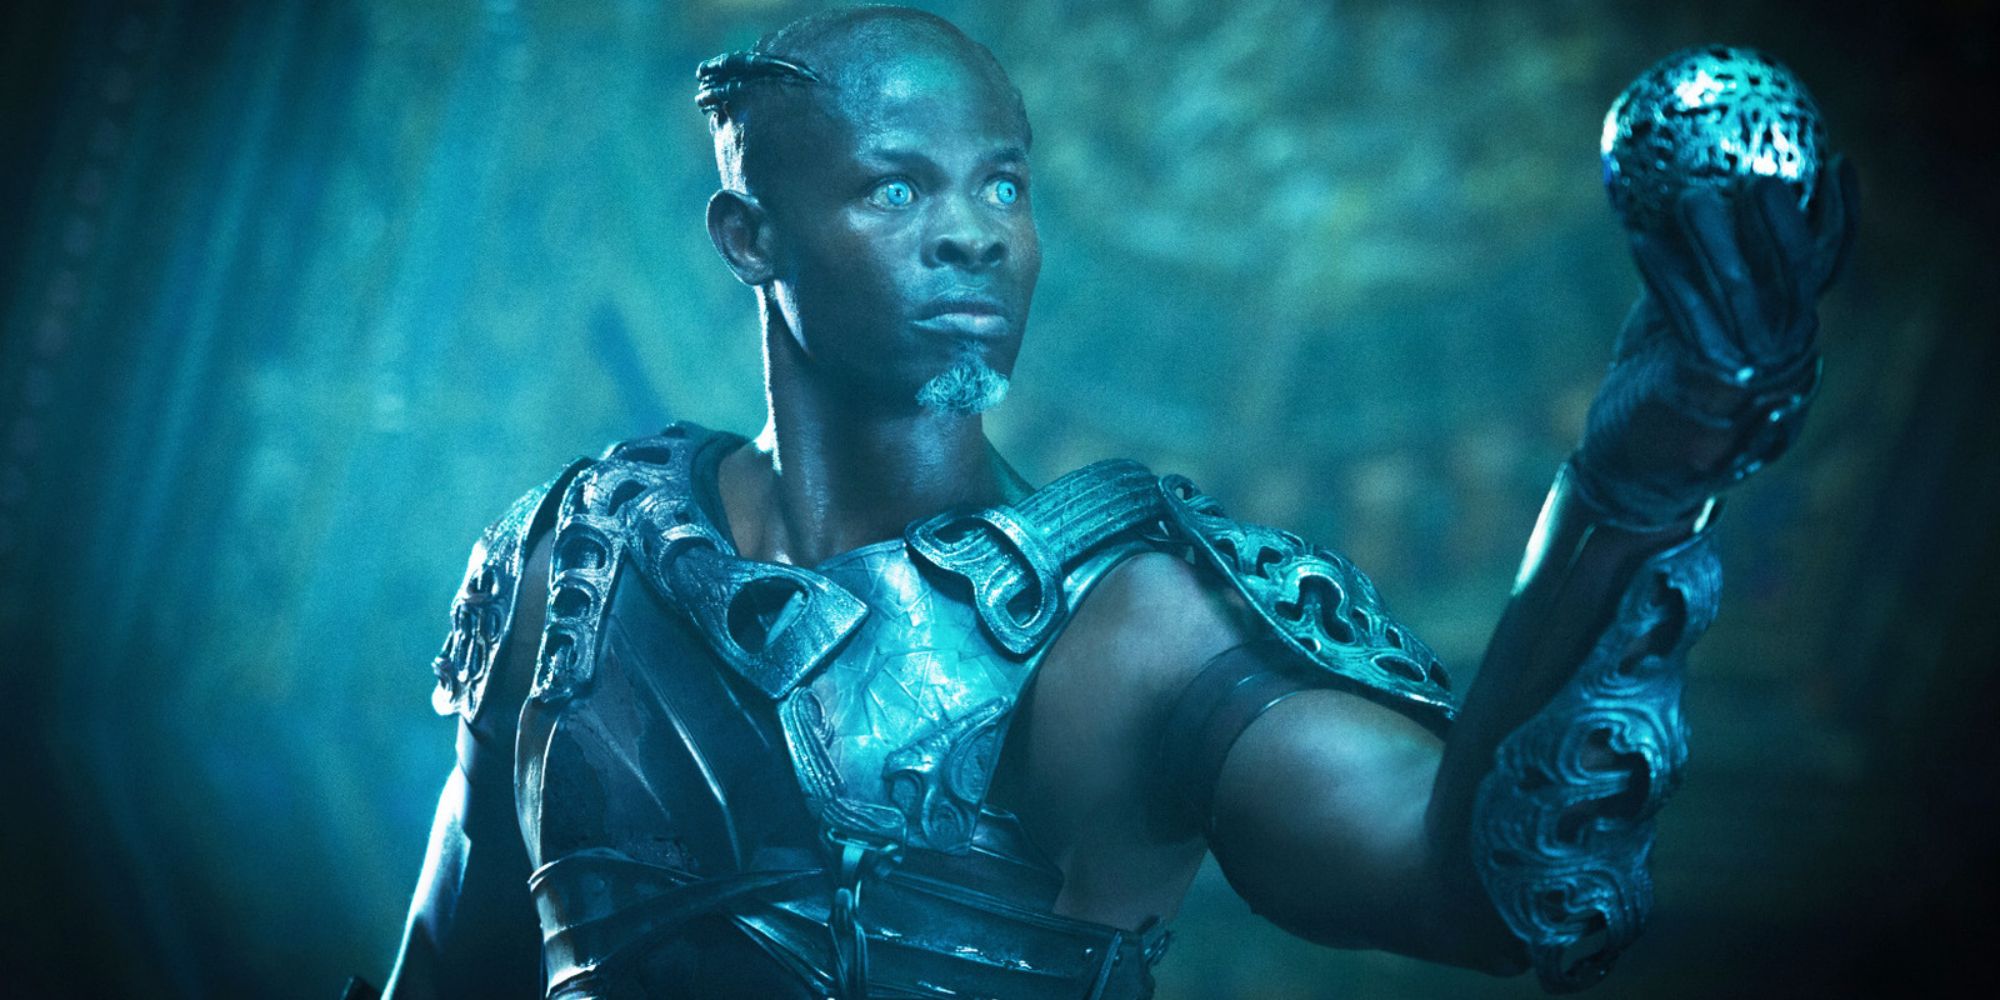 Hounsou as Korvath holding the Power Stone